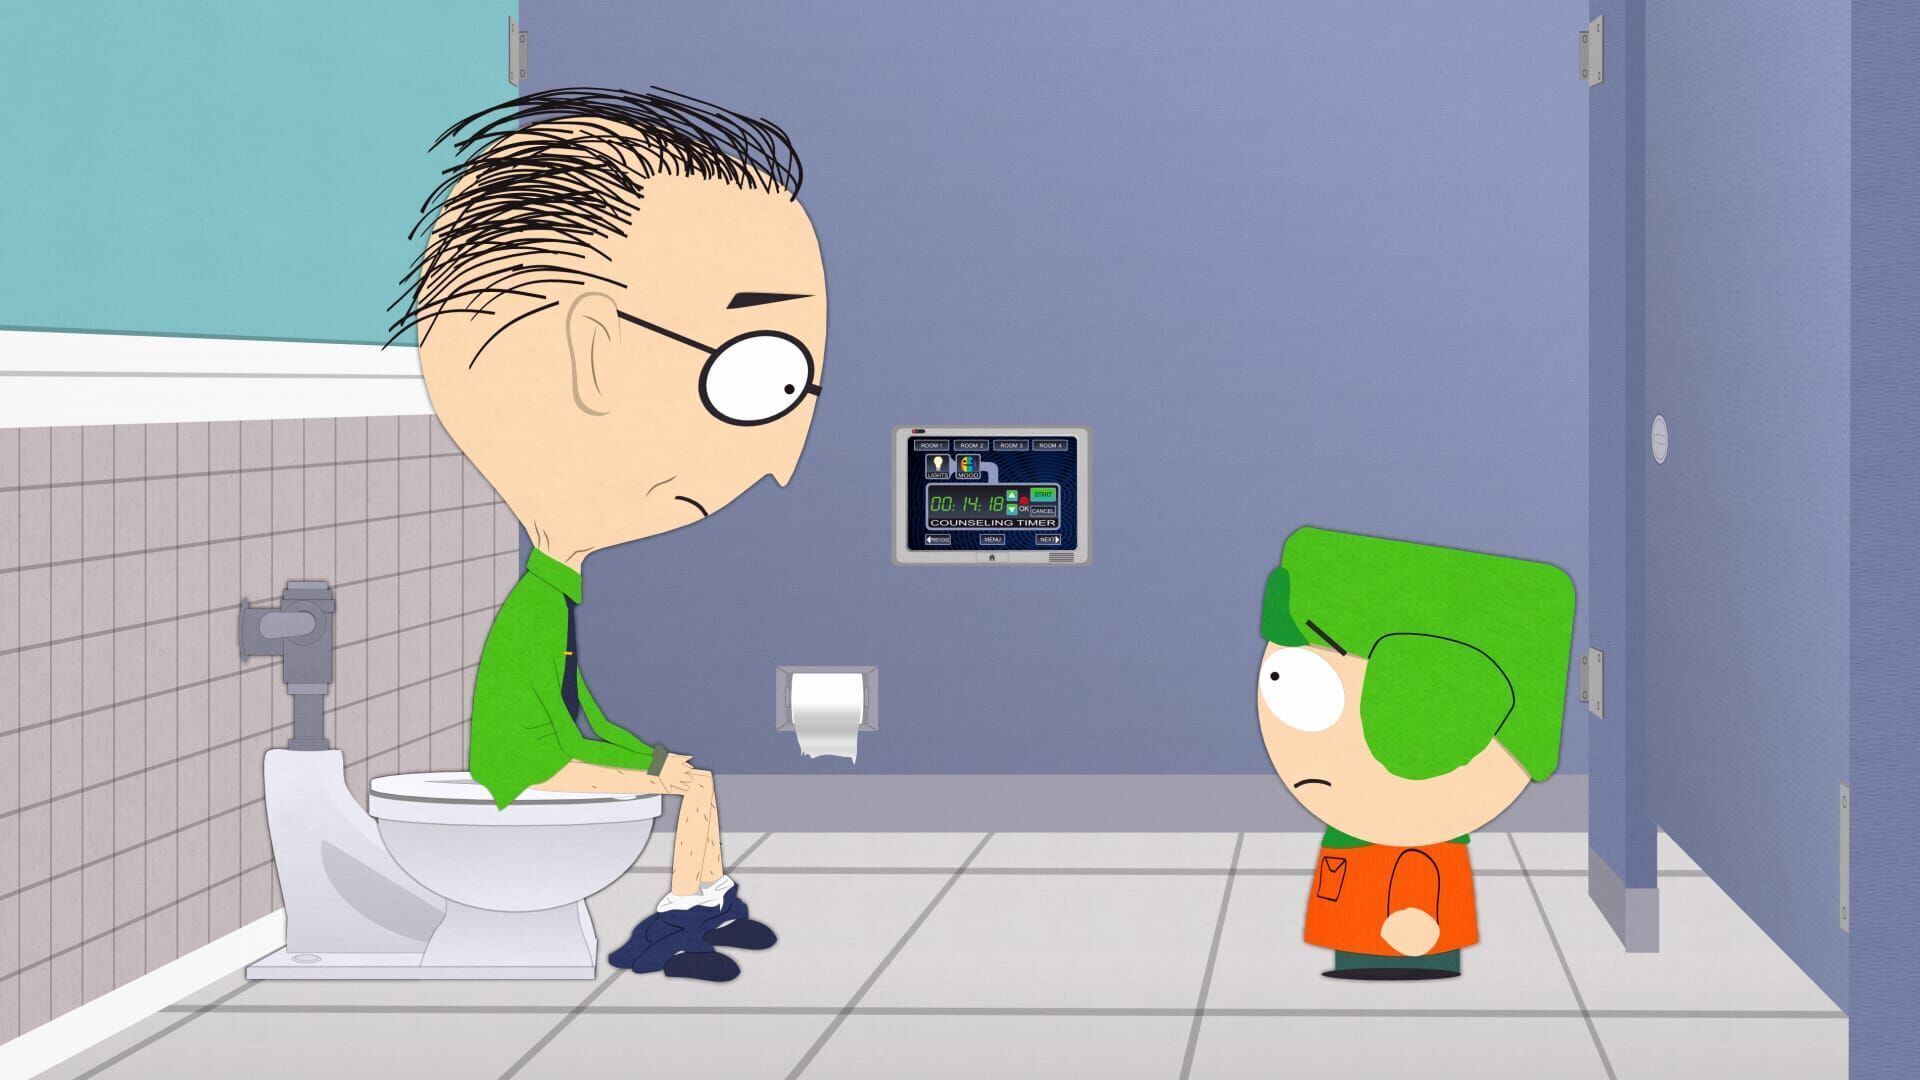 South Park - Taming Strange